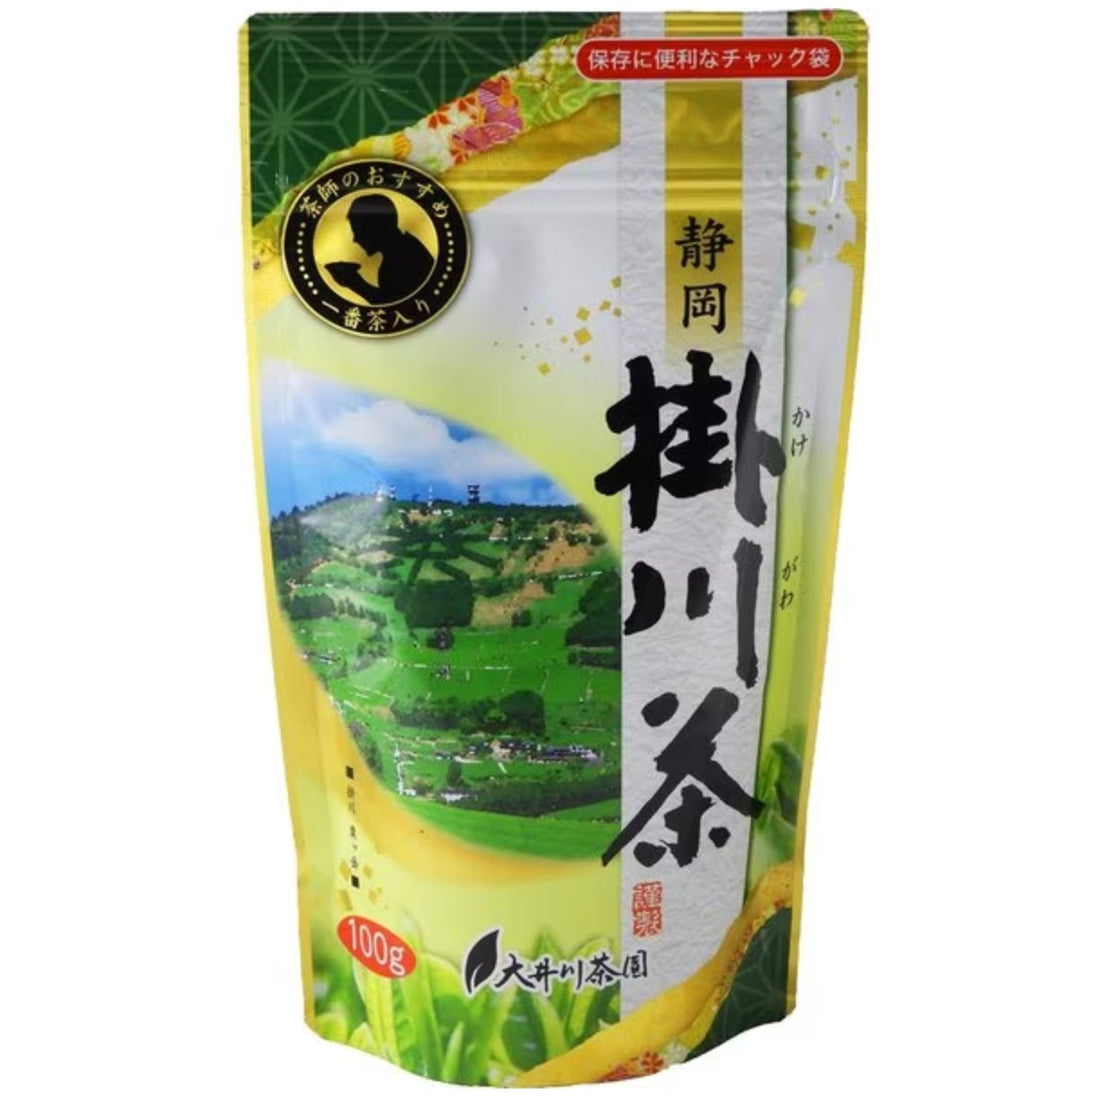 Oigawa Tea Garden Tea Master&